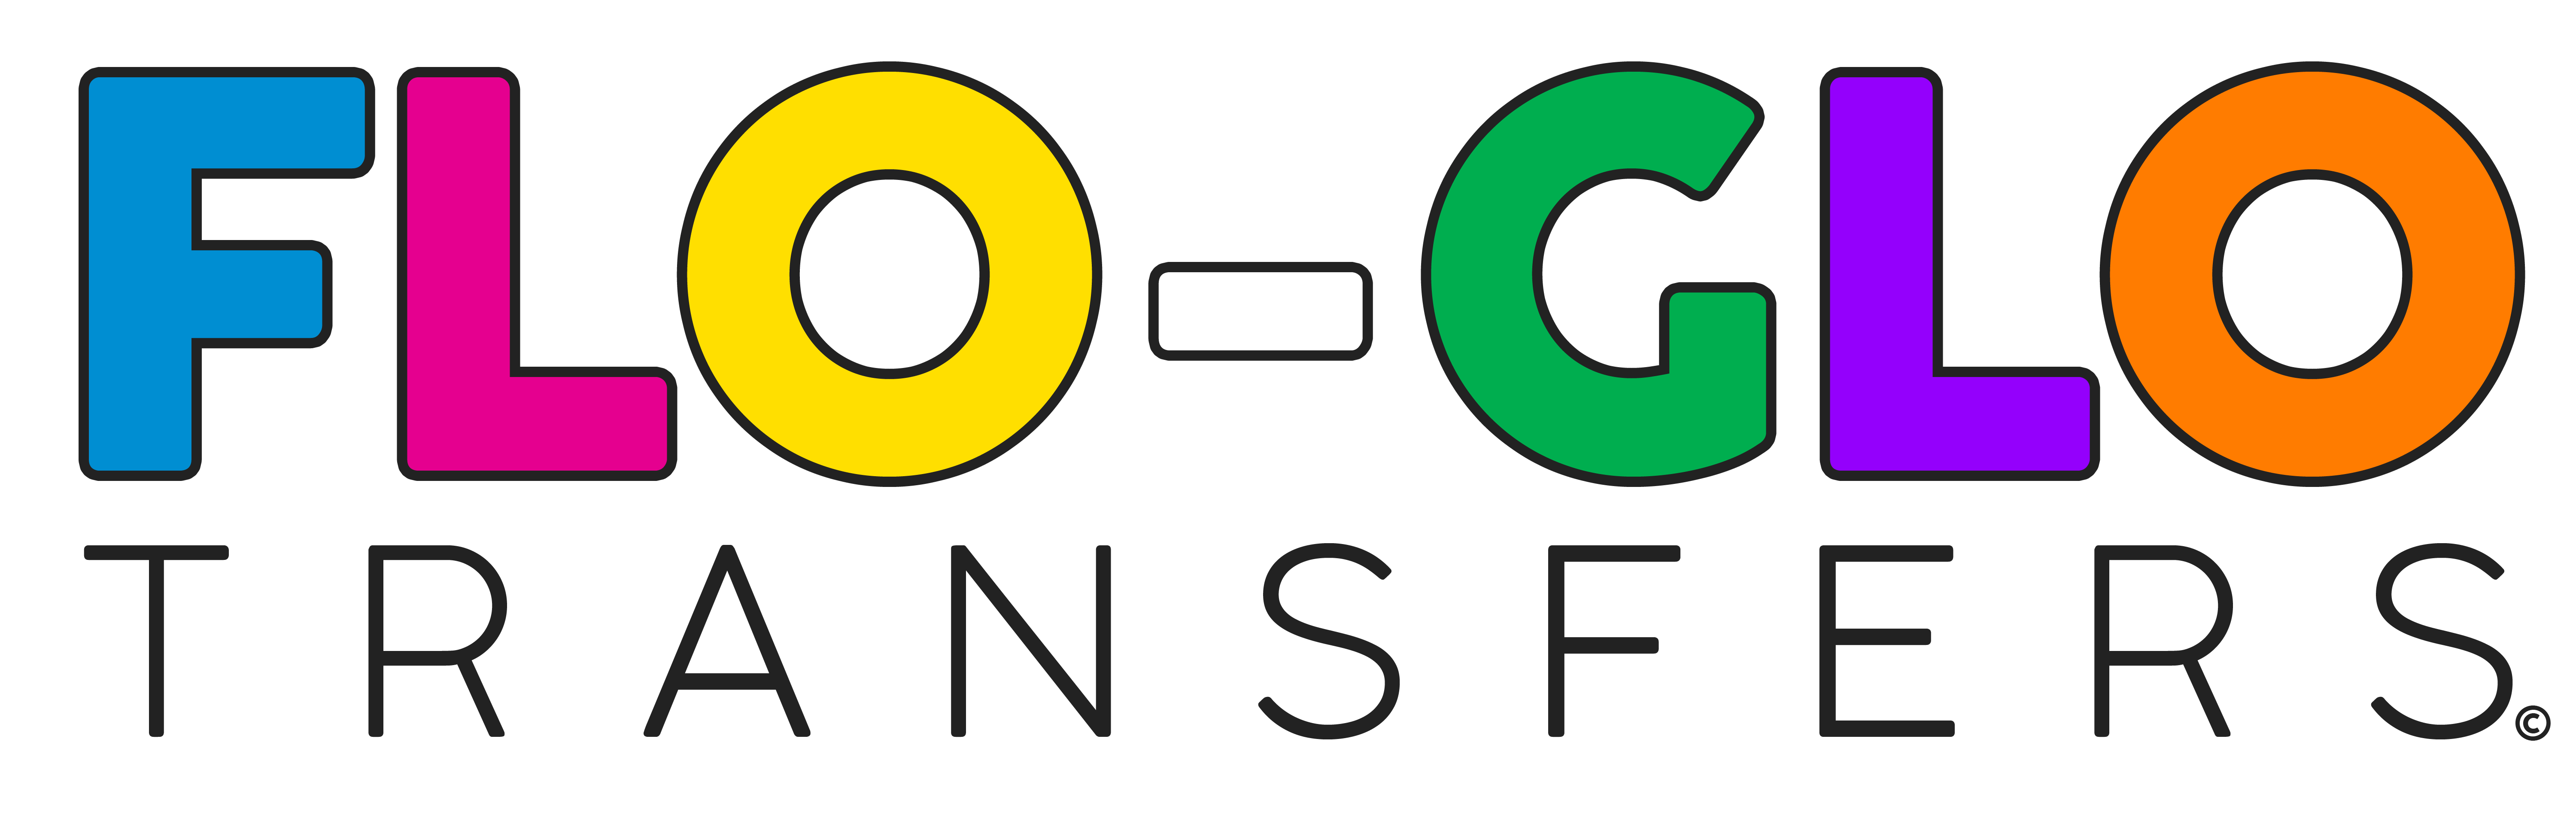 FLO_GLO_Transfers_TEXT_Logo